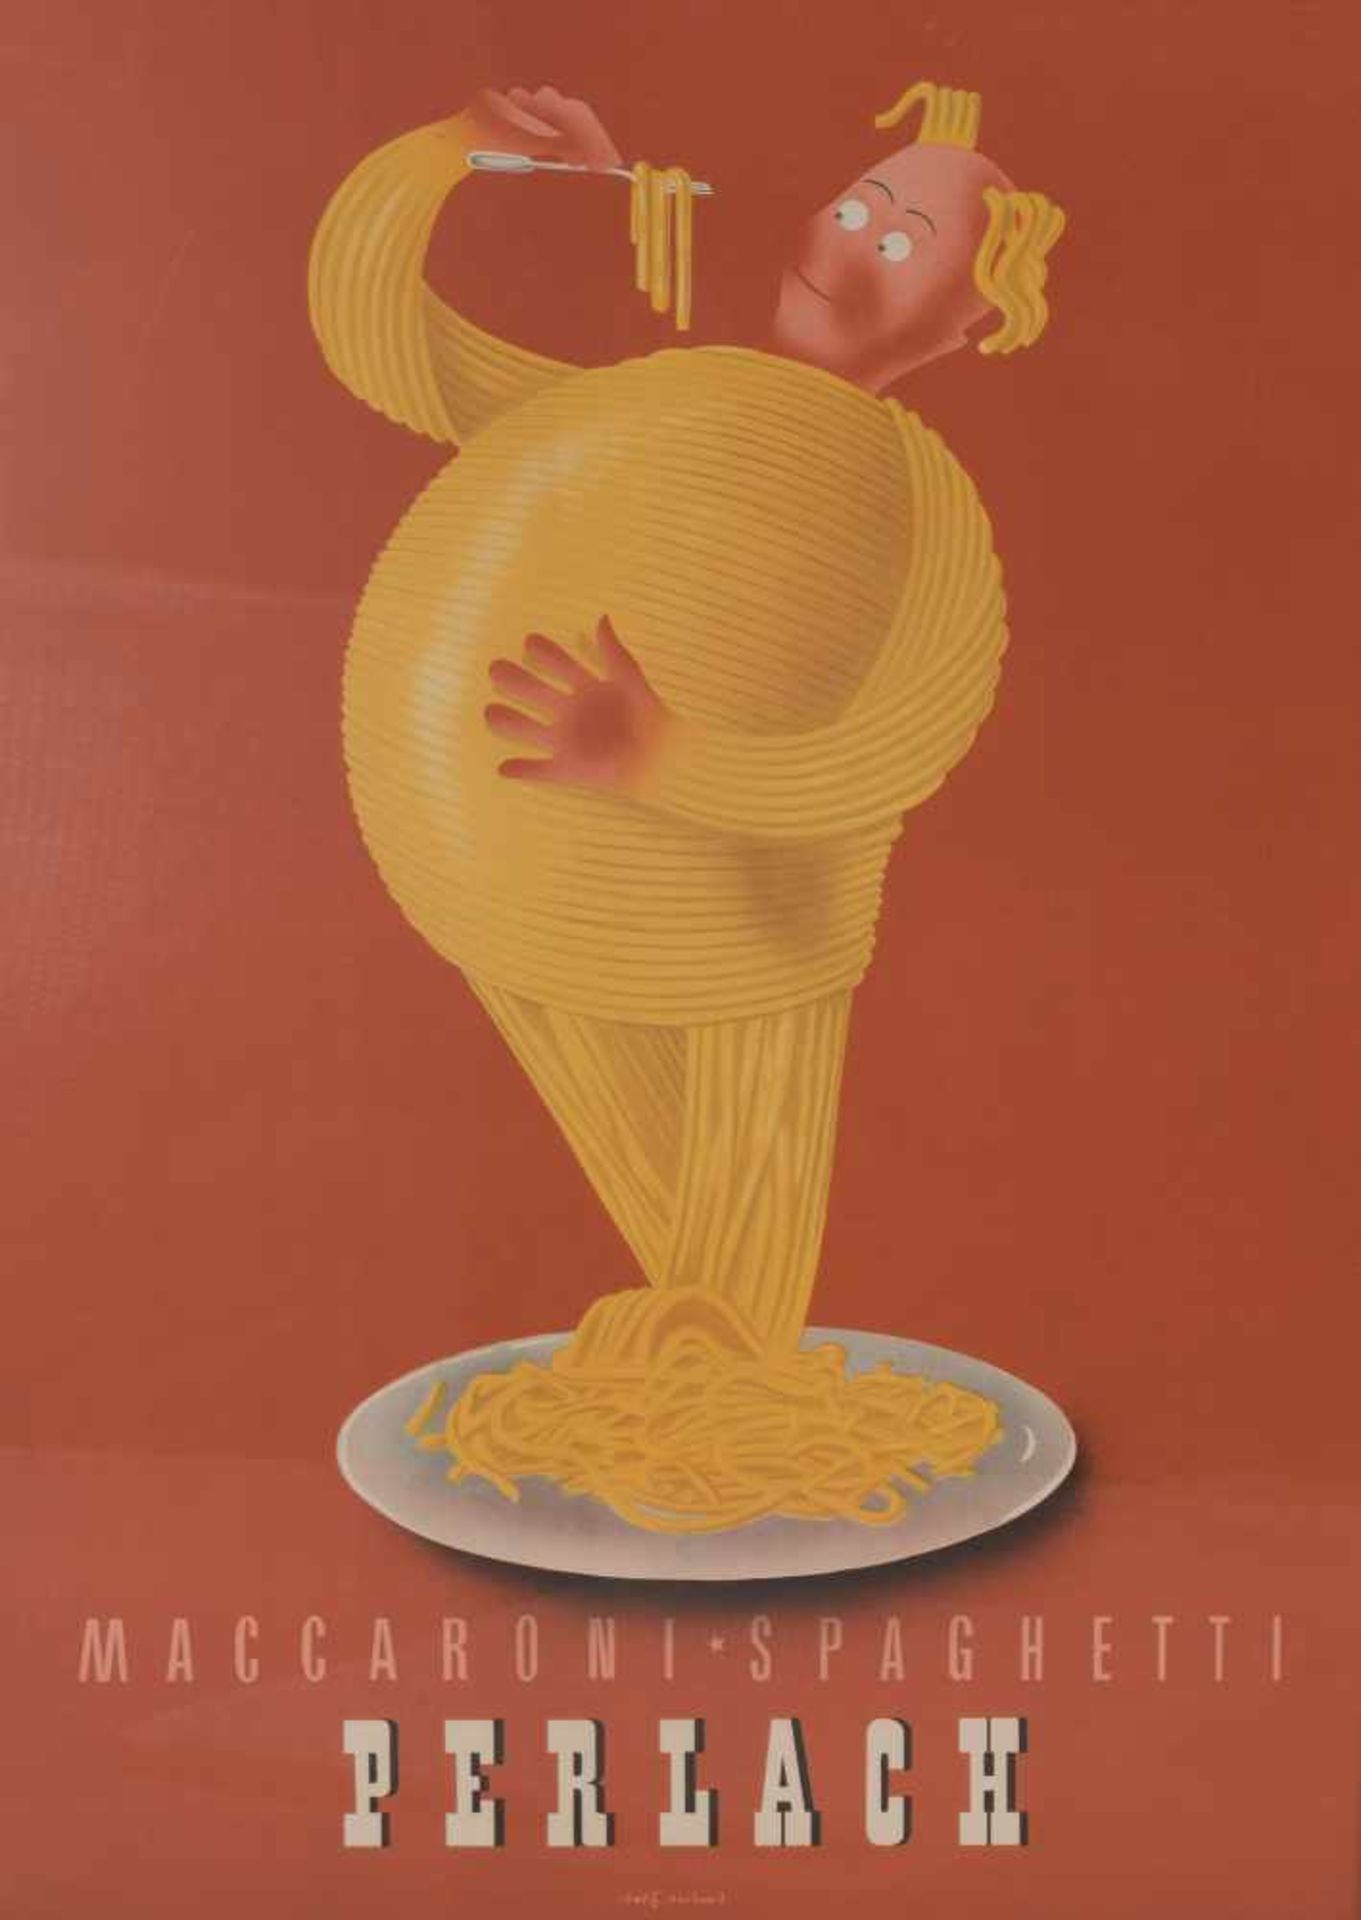 Plakat 'Maccaroni Perlach', um 1945/46 Richard Roth 83,2 x 58,5 cm (Darstellung), 94,3 x 59,2 (